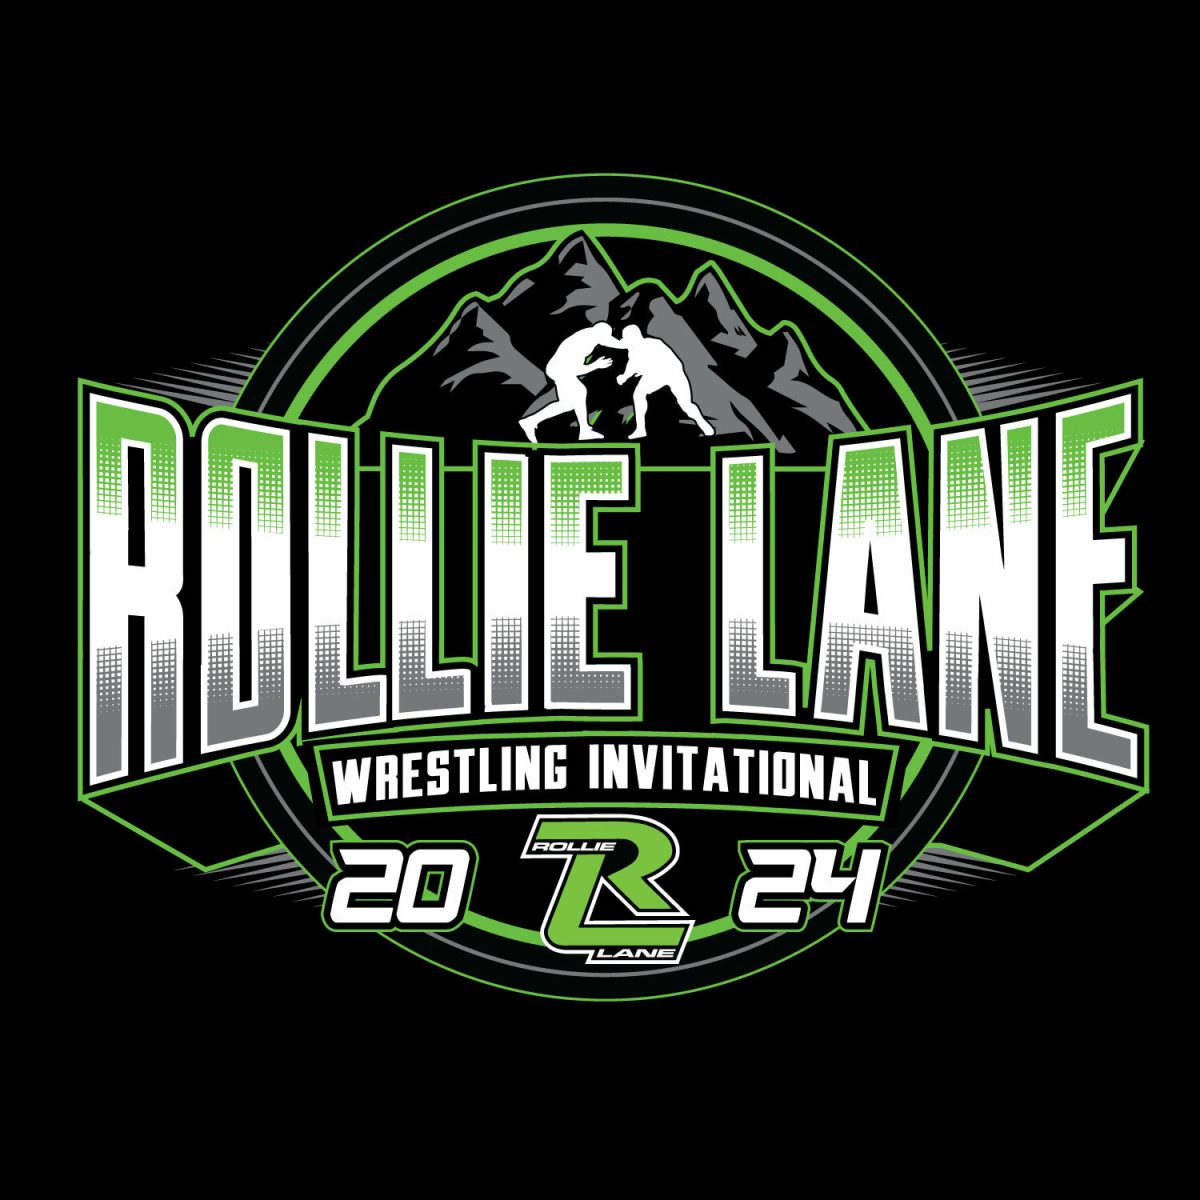 Rollie Lane Wrestling Tournament